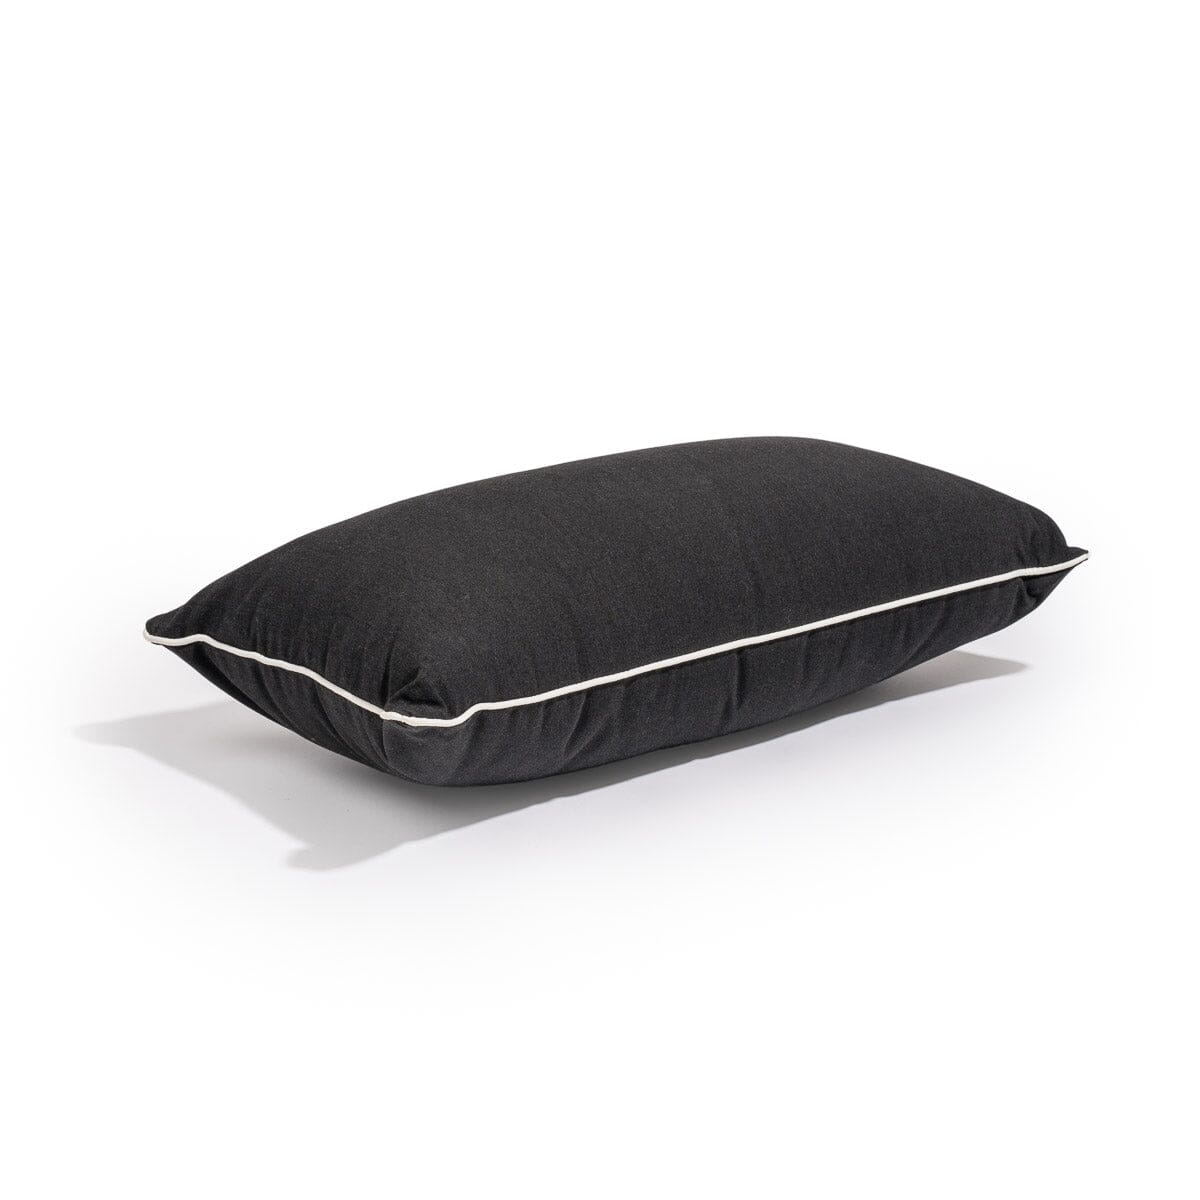 The Rectangle Throw Pillow - Rivie Black Rectangle Throw Pillow Business & Pleasure Co Aus 